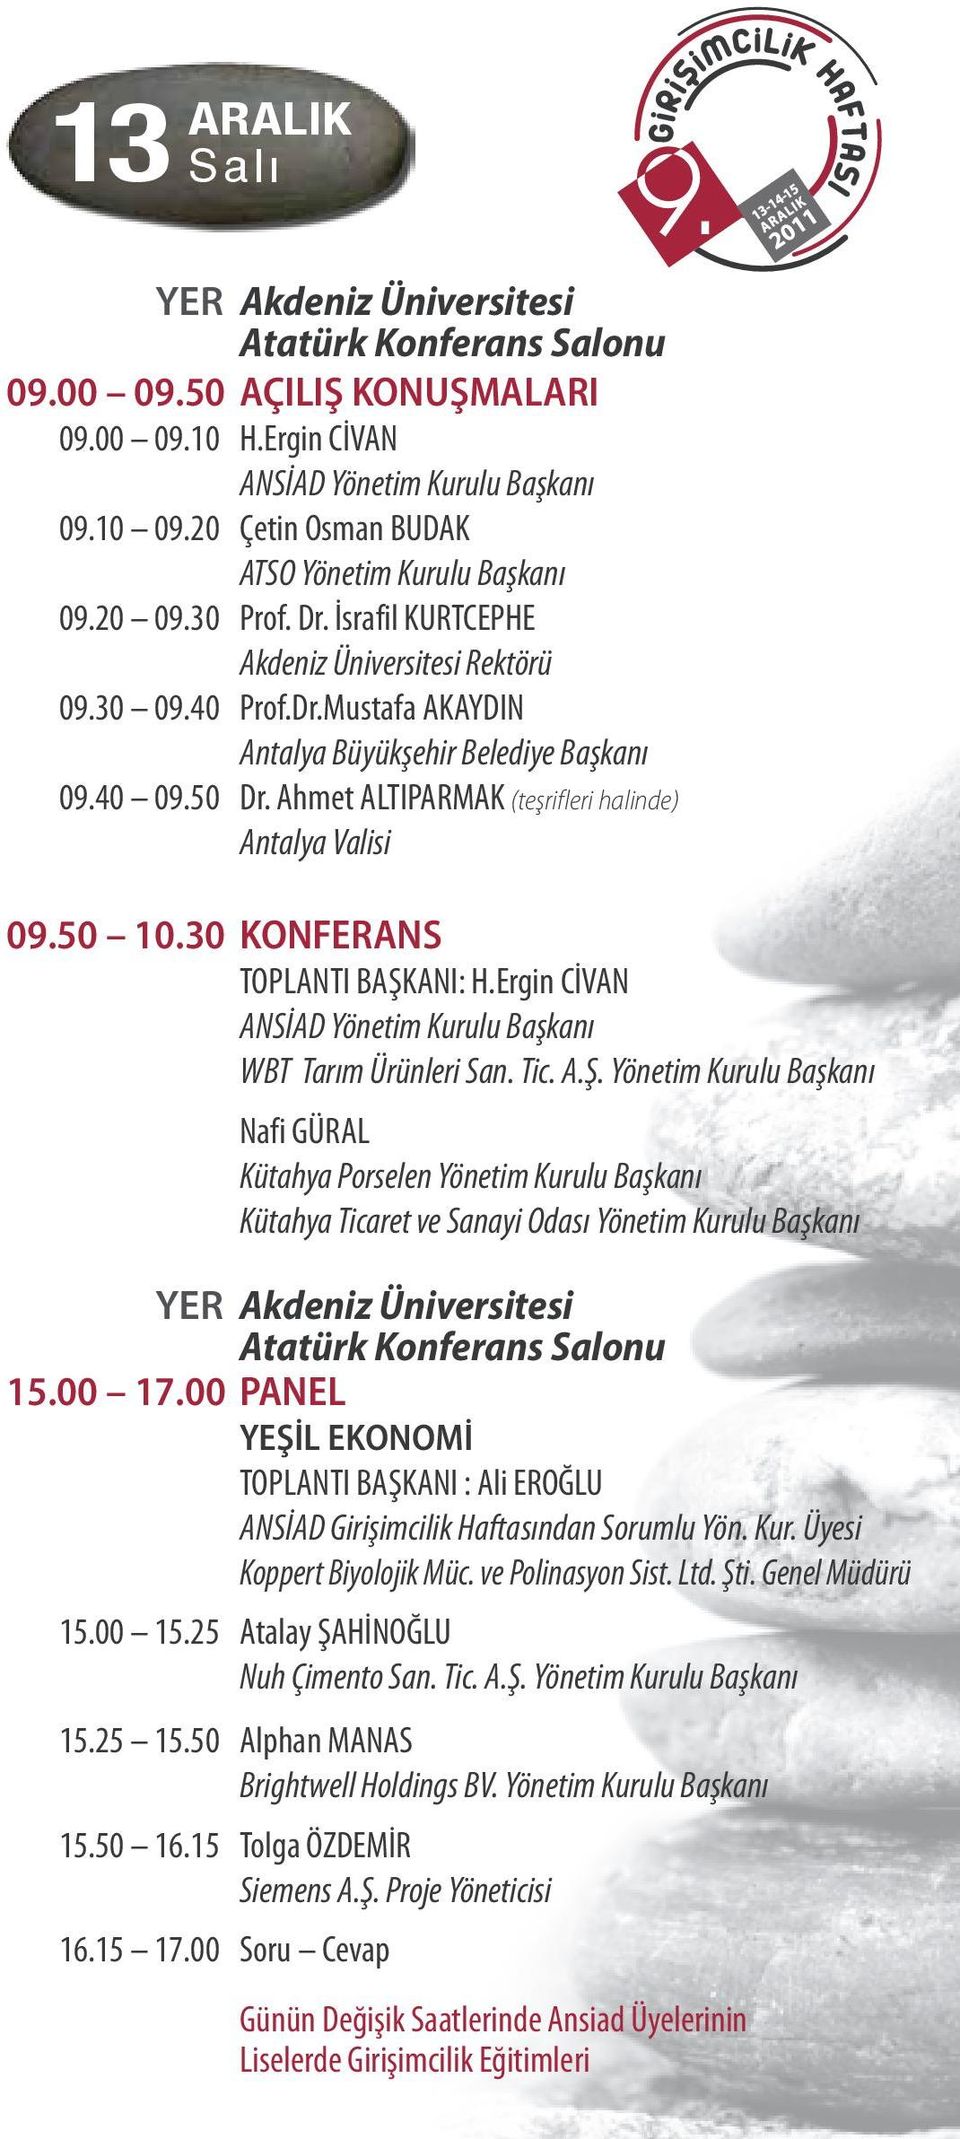 50 Dr. Ahmet ALTIPARMAK (teşrifleri halinde) Antalya Valisi 09.50 10.30 KONFERANS TOPLANTI BAŞK